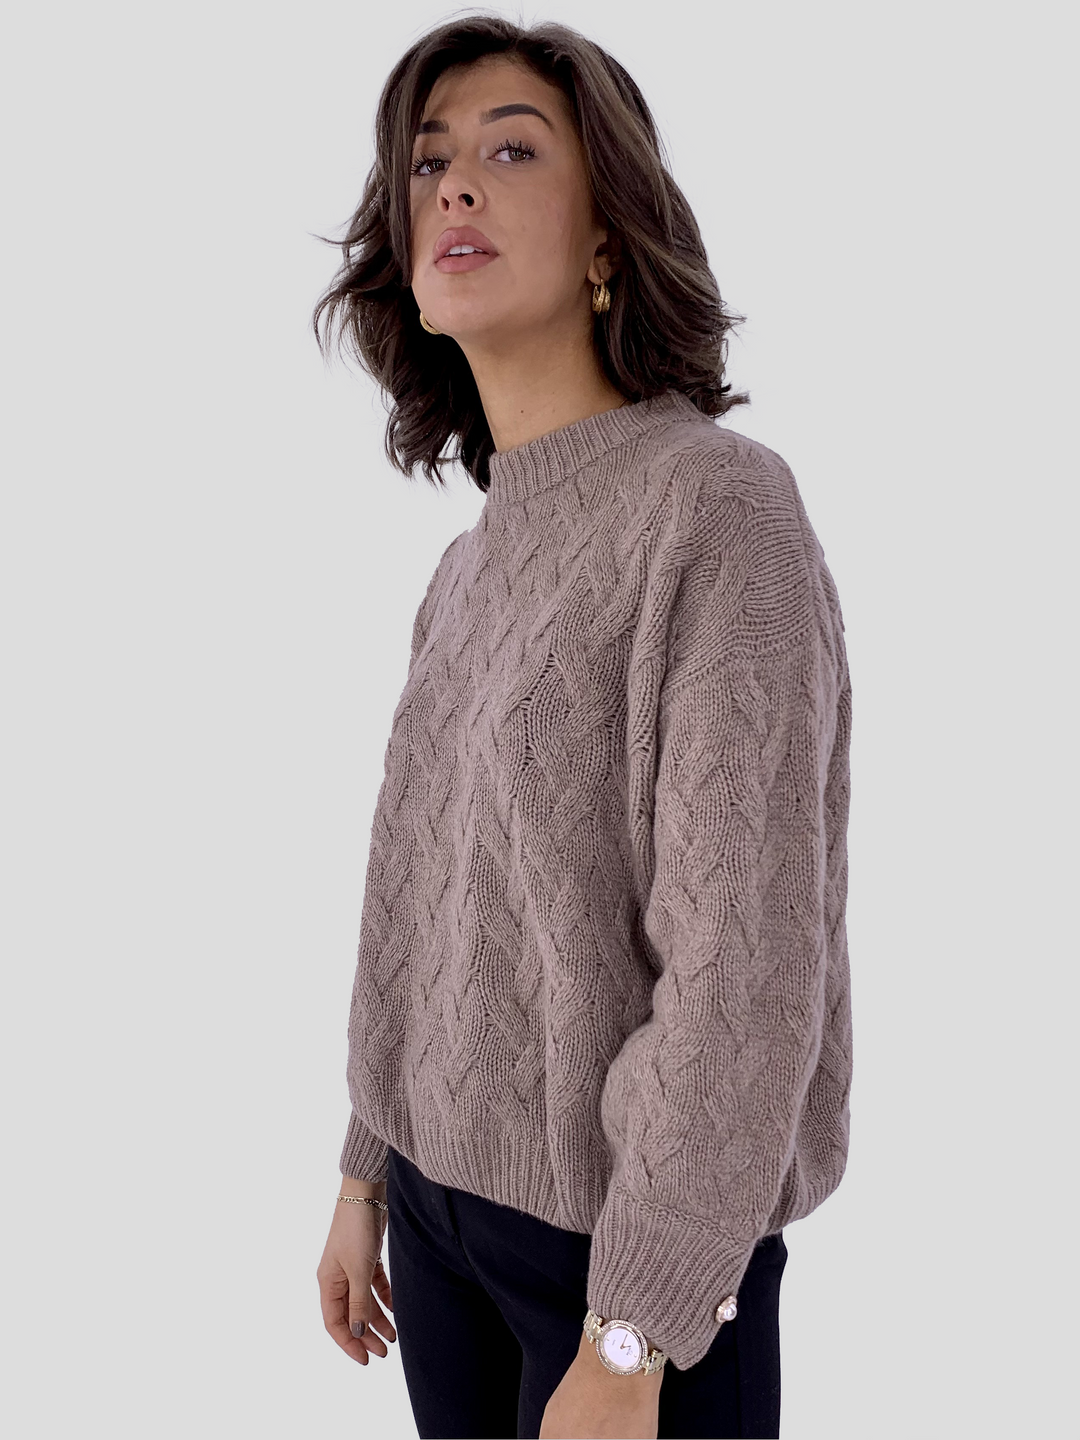 Darwin Sweater - 100% Cashmere - Women - Brown